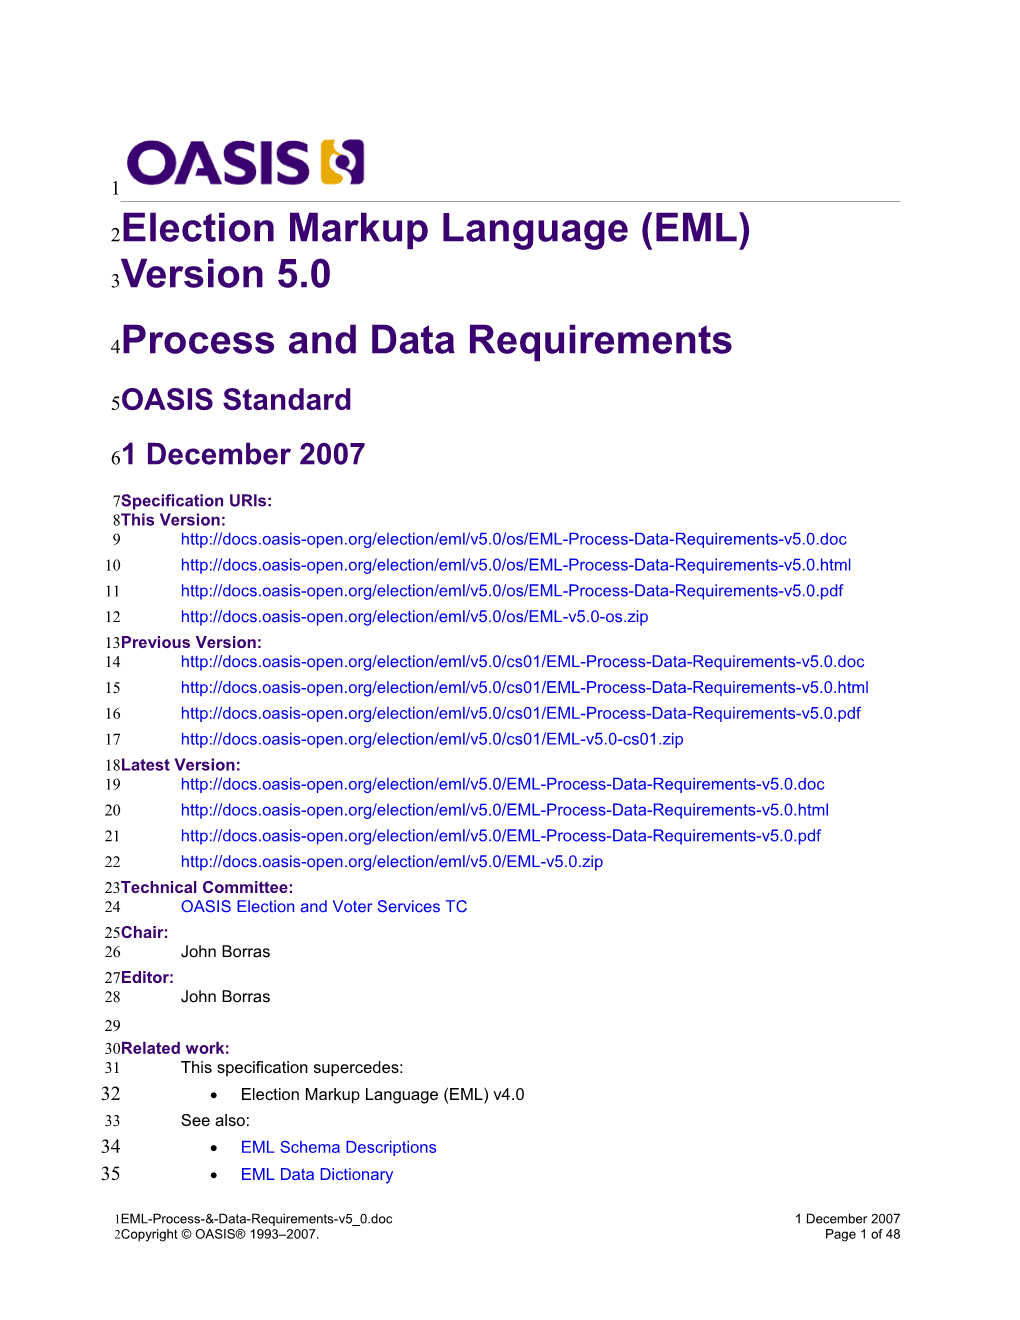 EML V5.0 Process & Data Requirements